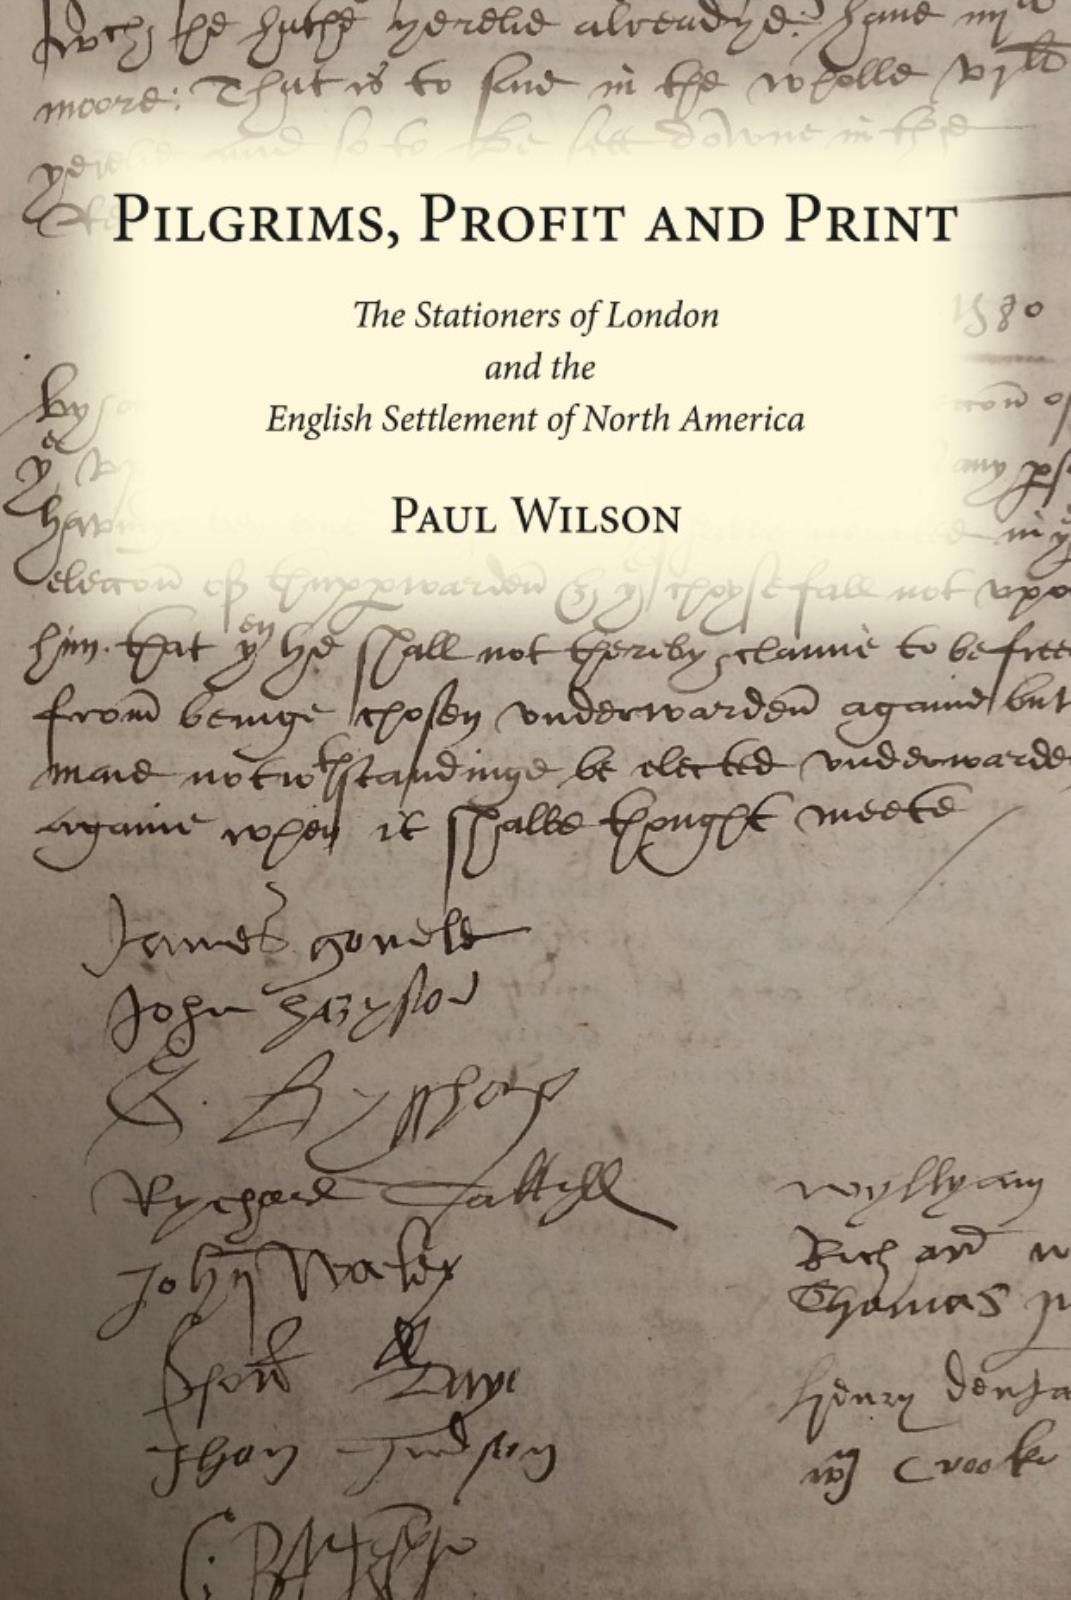 Pilgrims, Profit and Print by Paul Wilson